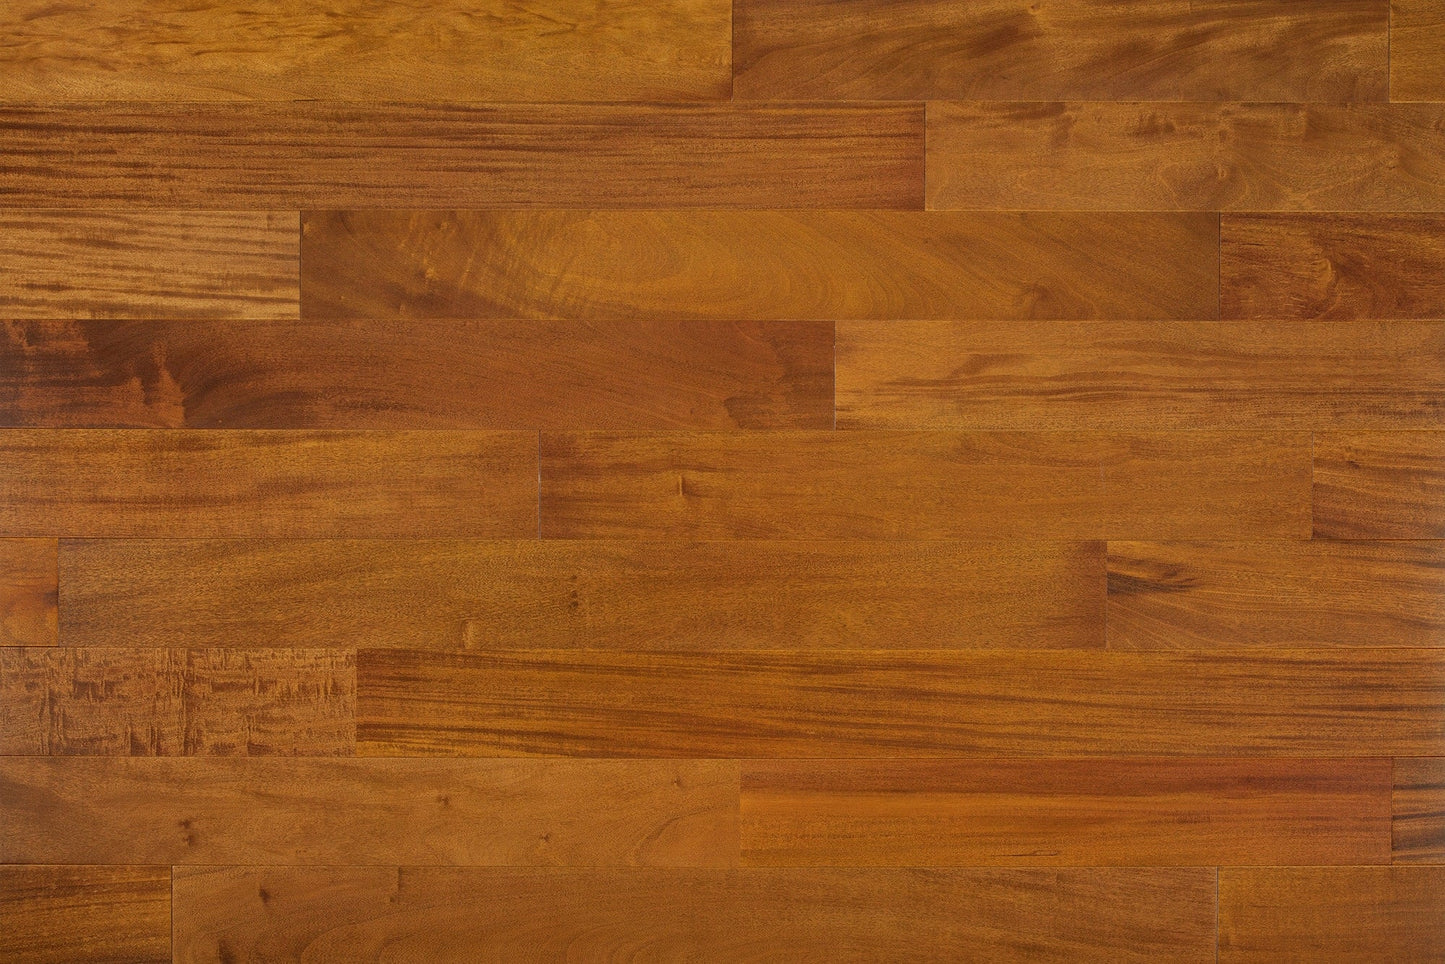 Andes Brazilian Solid Hardwood Flooring